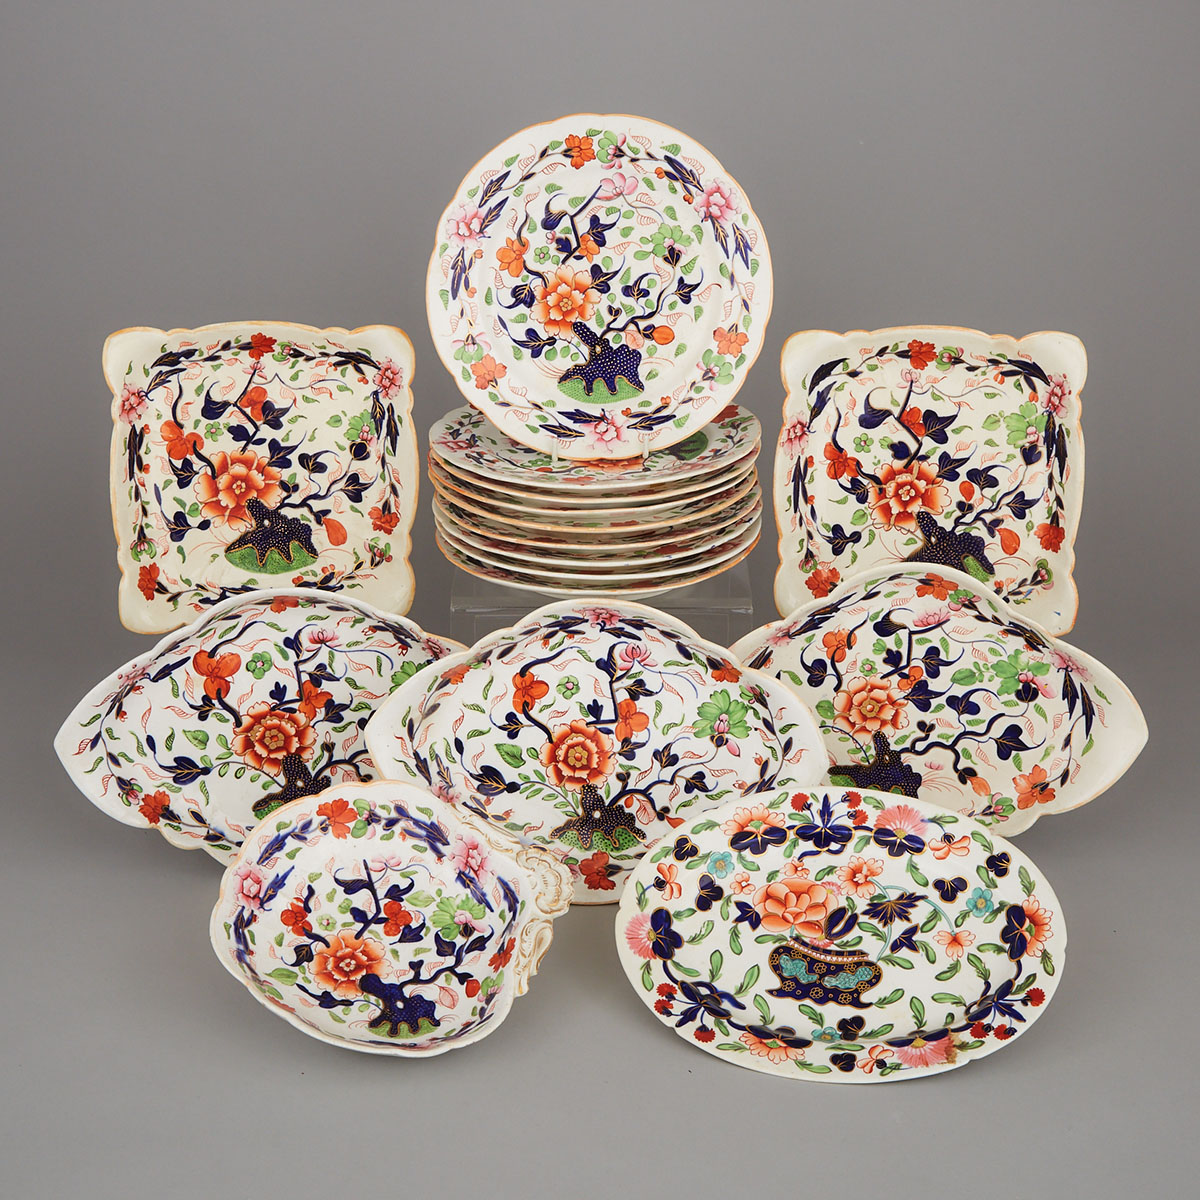 English Porcelain Japan Pattern Dessert Service, probably Coalport, c.1825